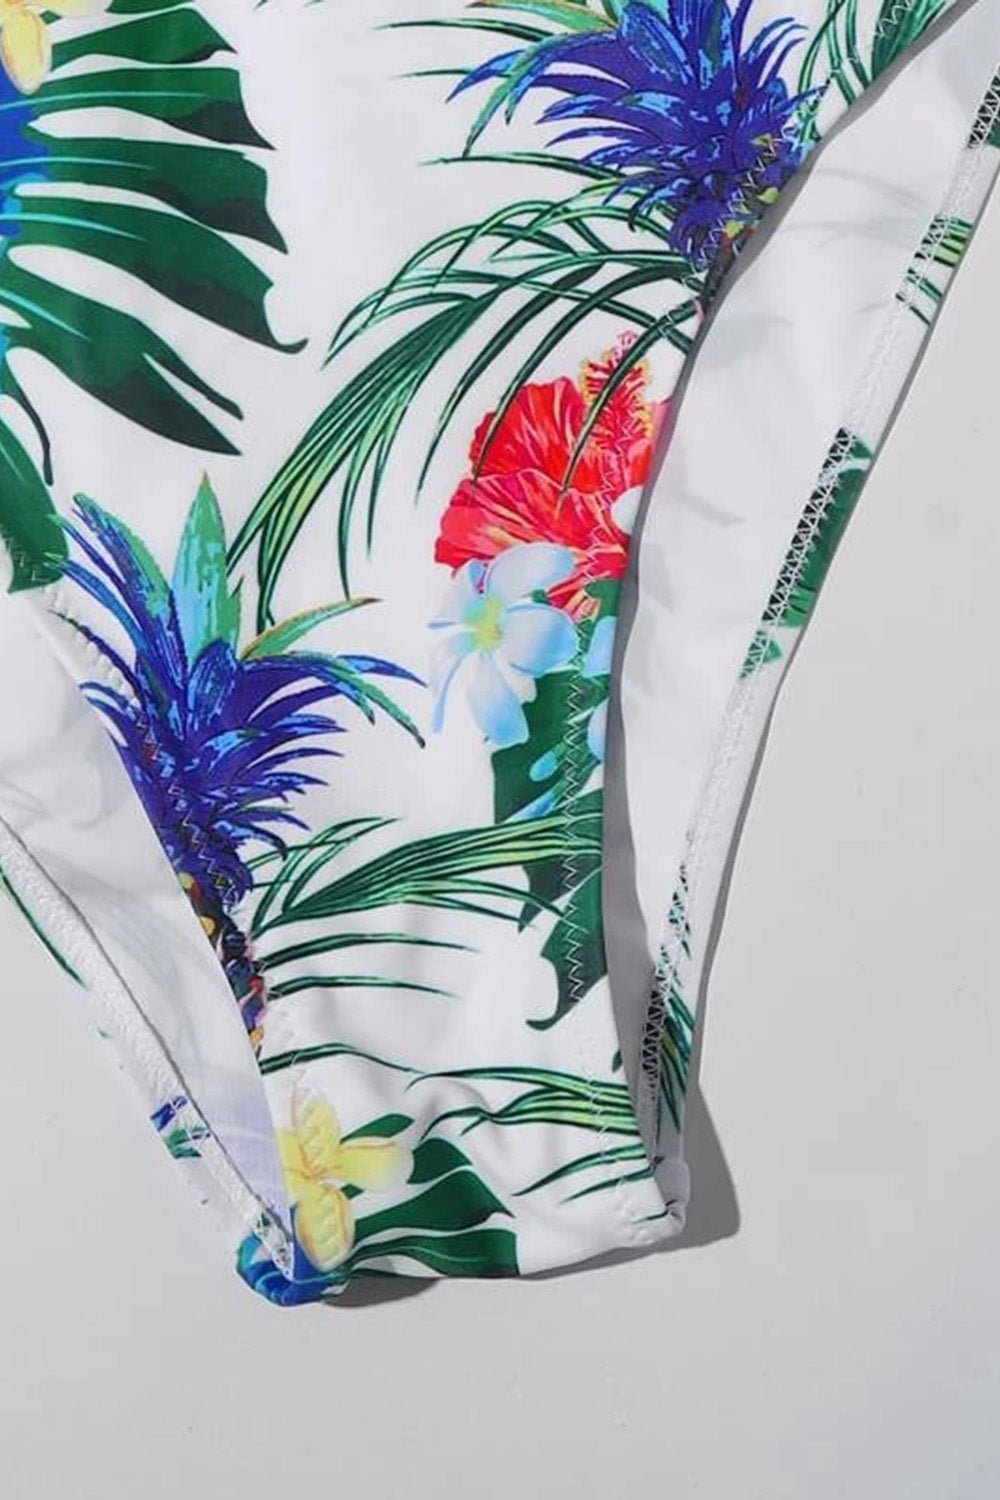 Tropical Random Print Twist Detail One Piece Swimsuit